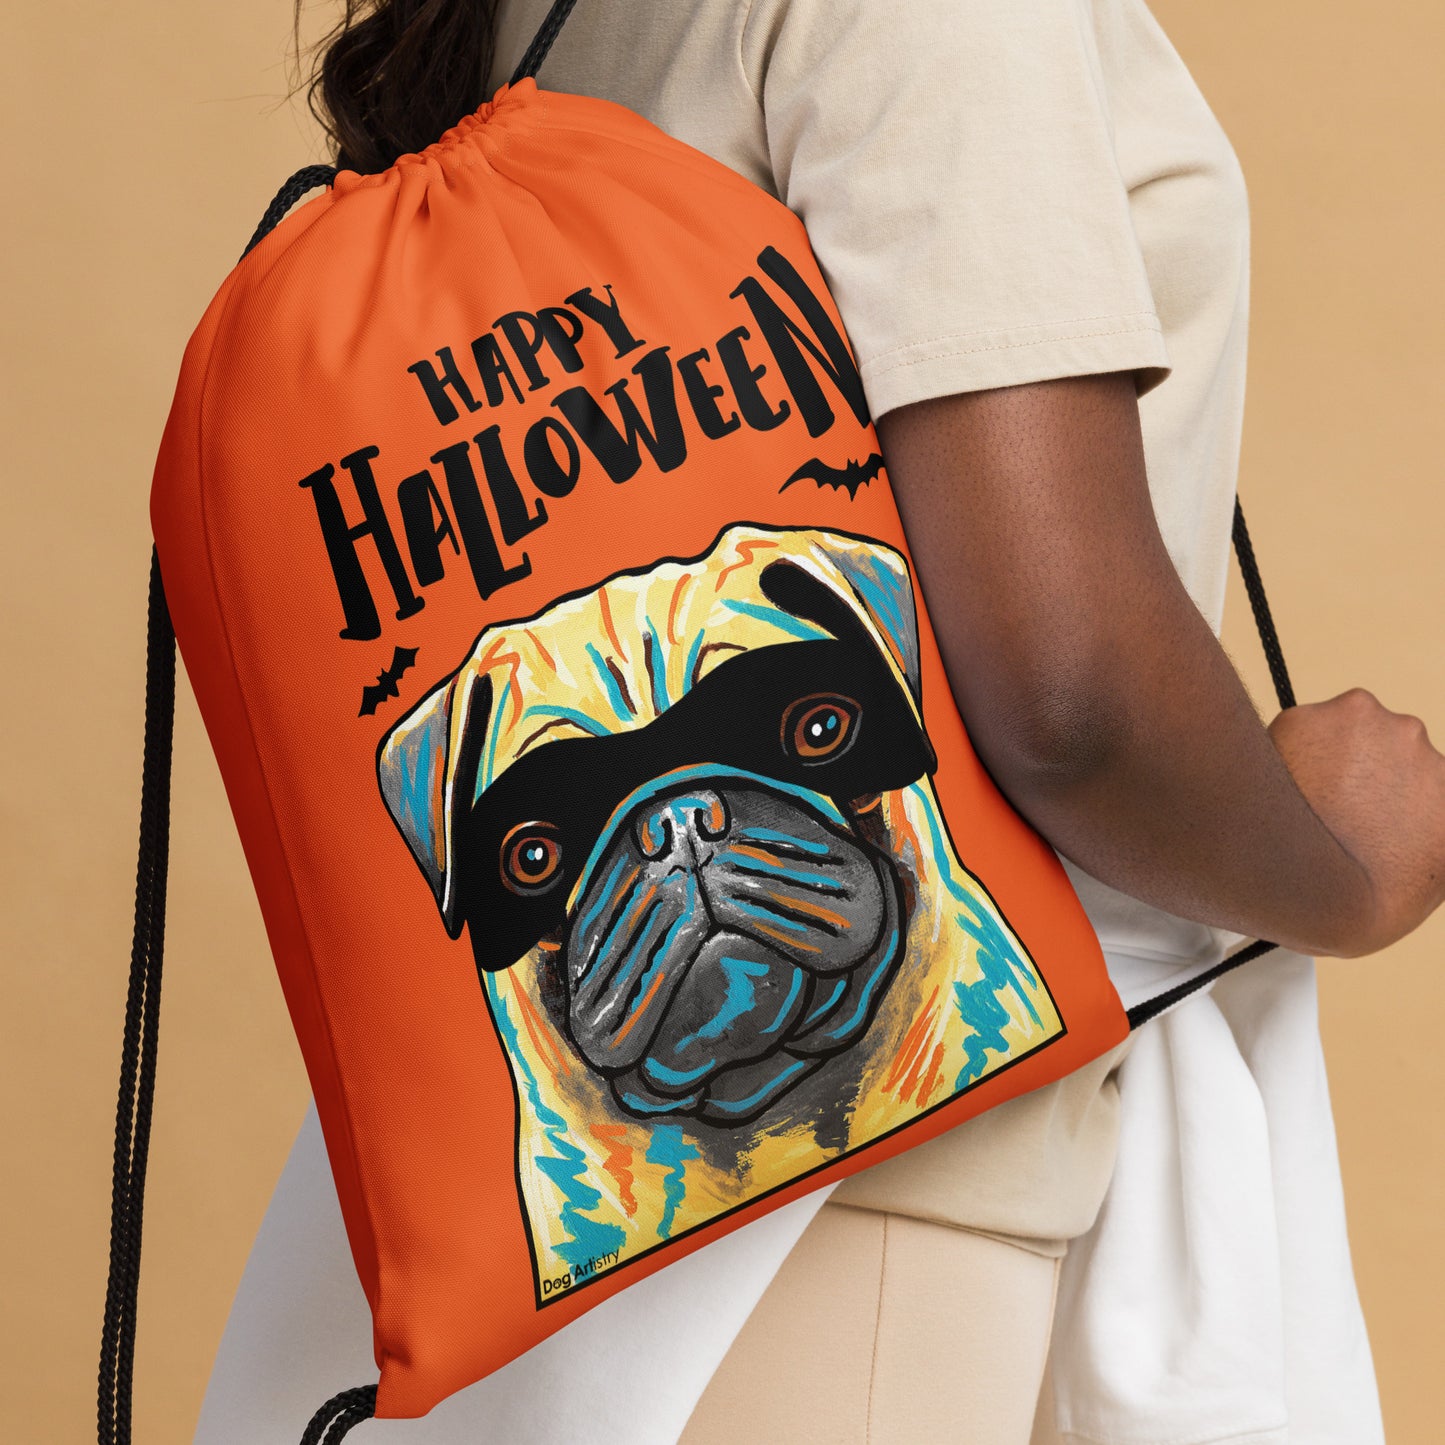 Happy Halloween Pug wearing mask Orange drawstring bag by Dog Artistry Halloween candy bag. Close up.